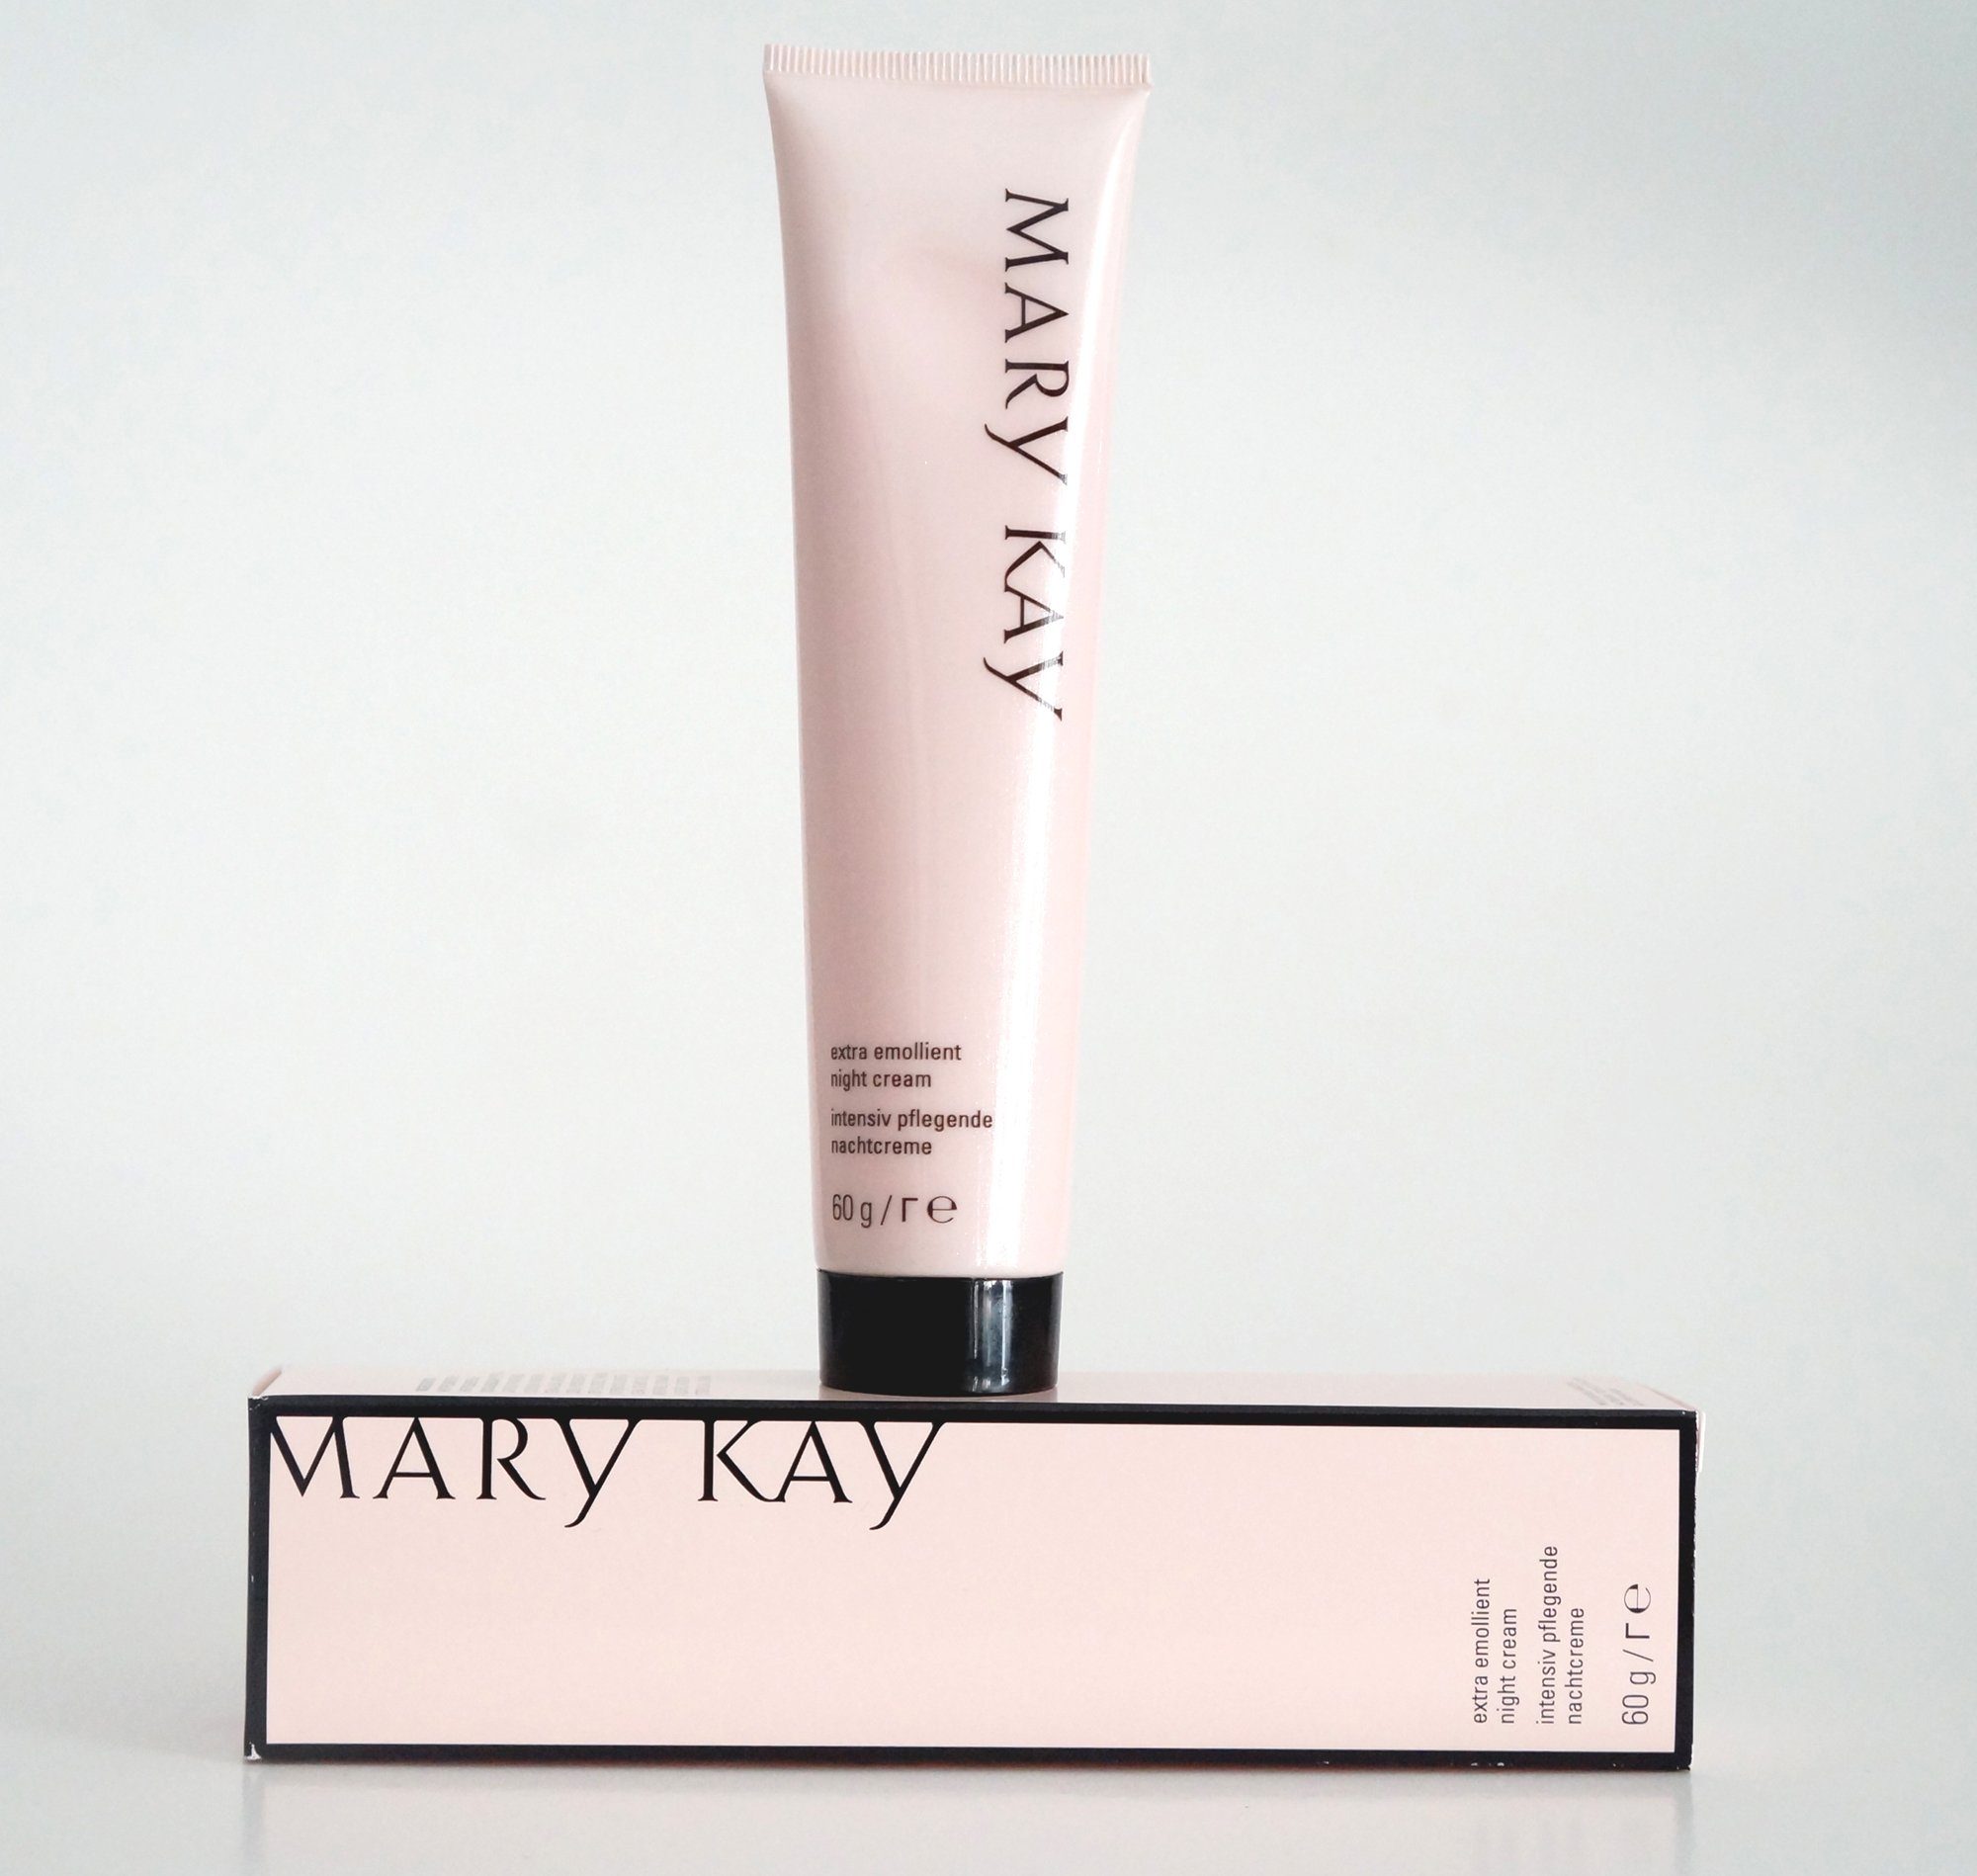 Mary Kay Nachtcreme Mary Kay Extra Emollient Night Cream Nachtcreme für trockene Haut 60 g | Nachtcremes